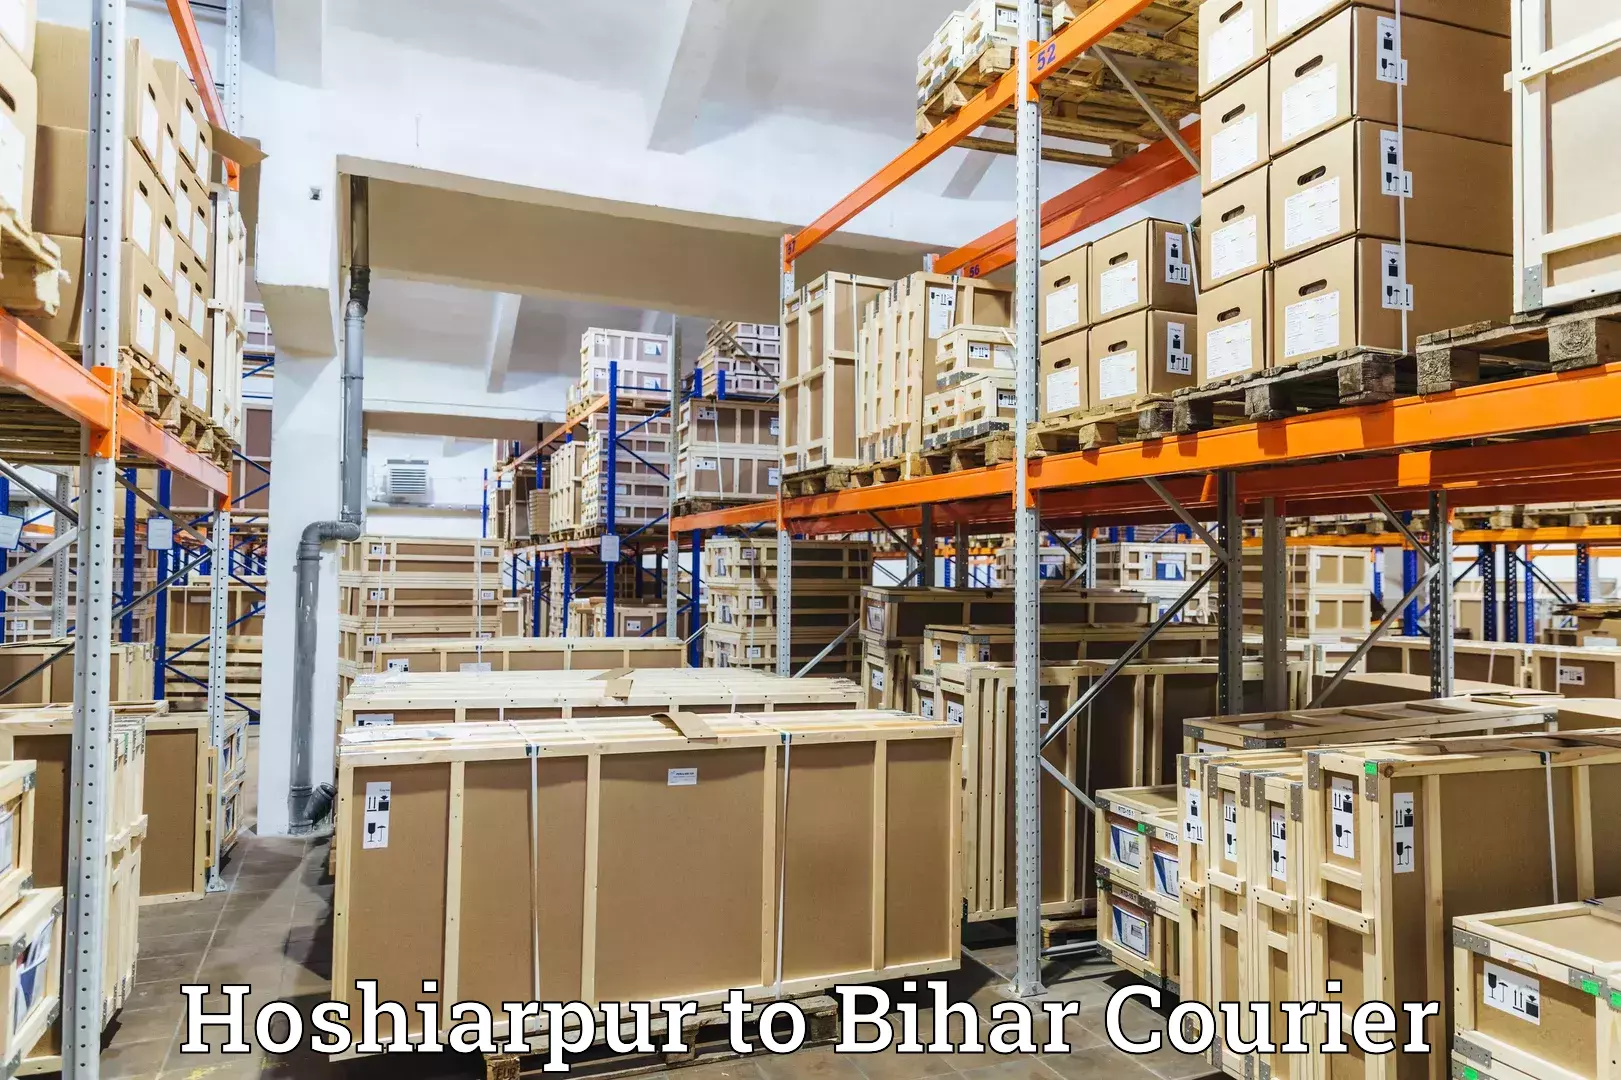 Global shipping networks Hoshiarpur to Sultanganj